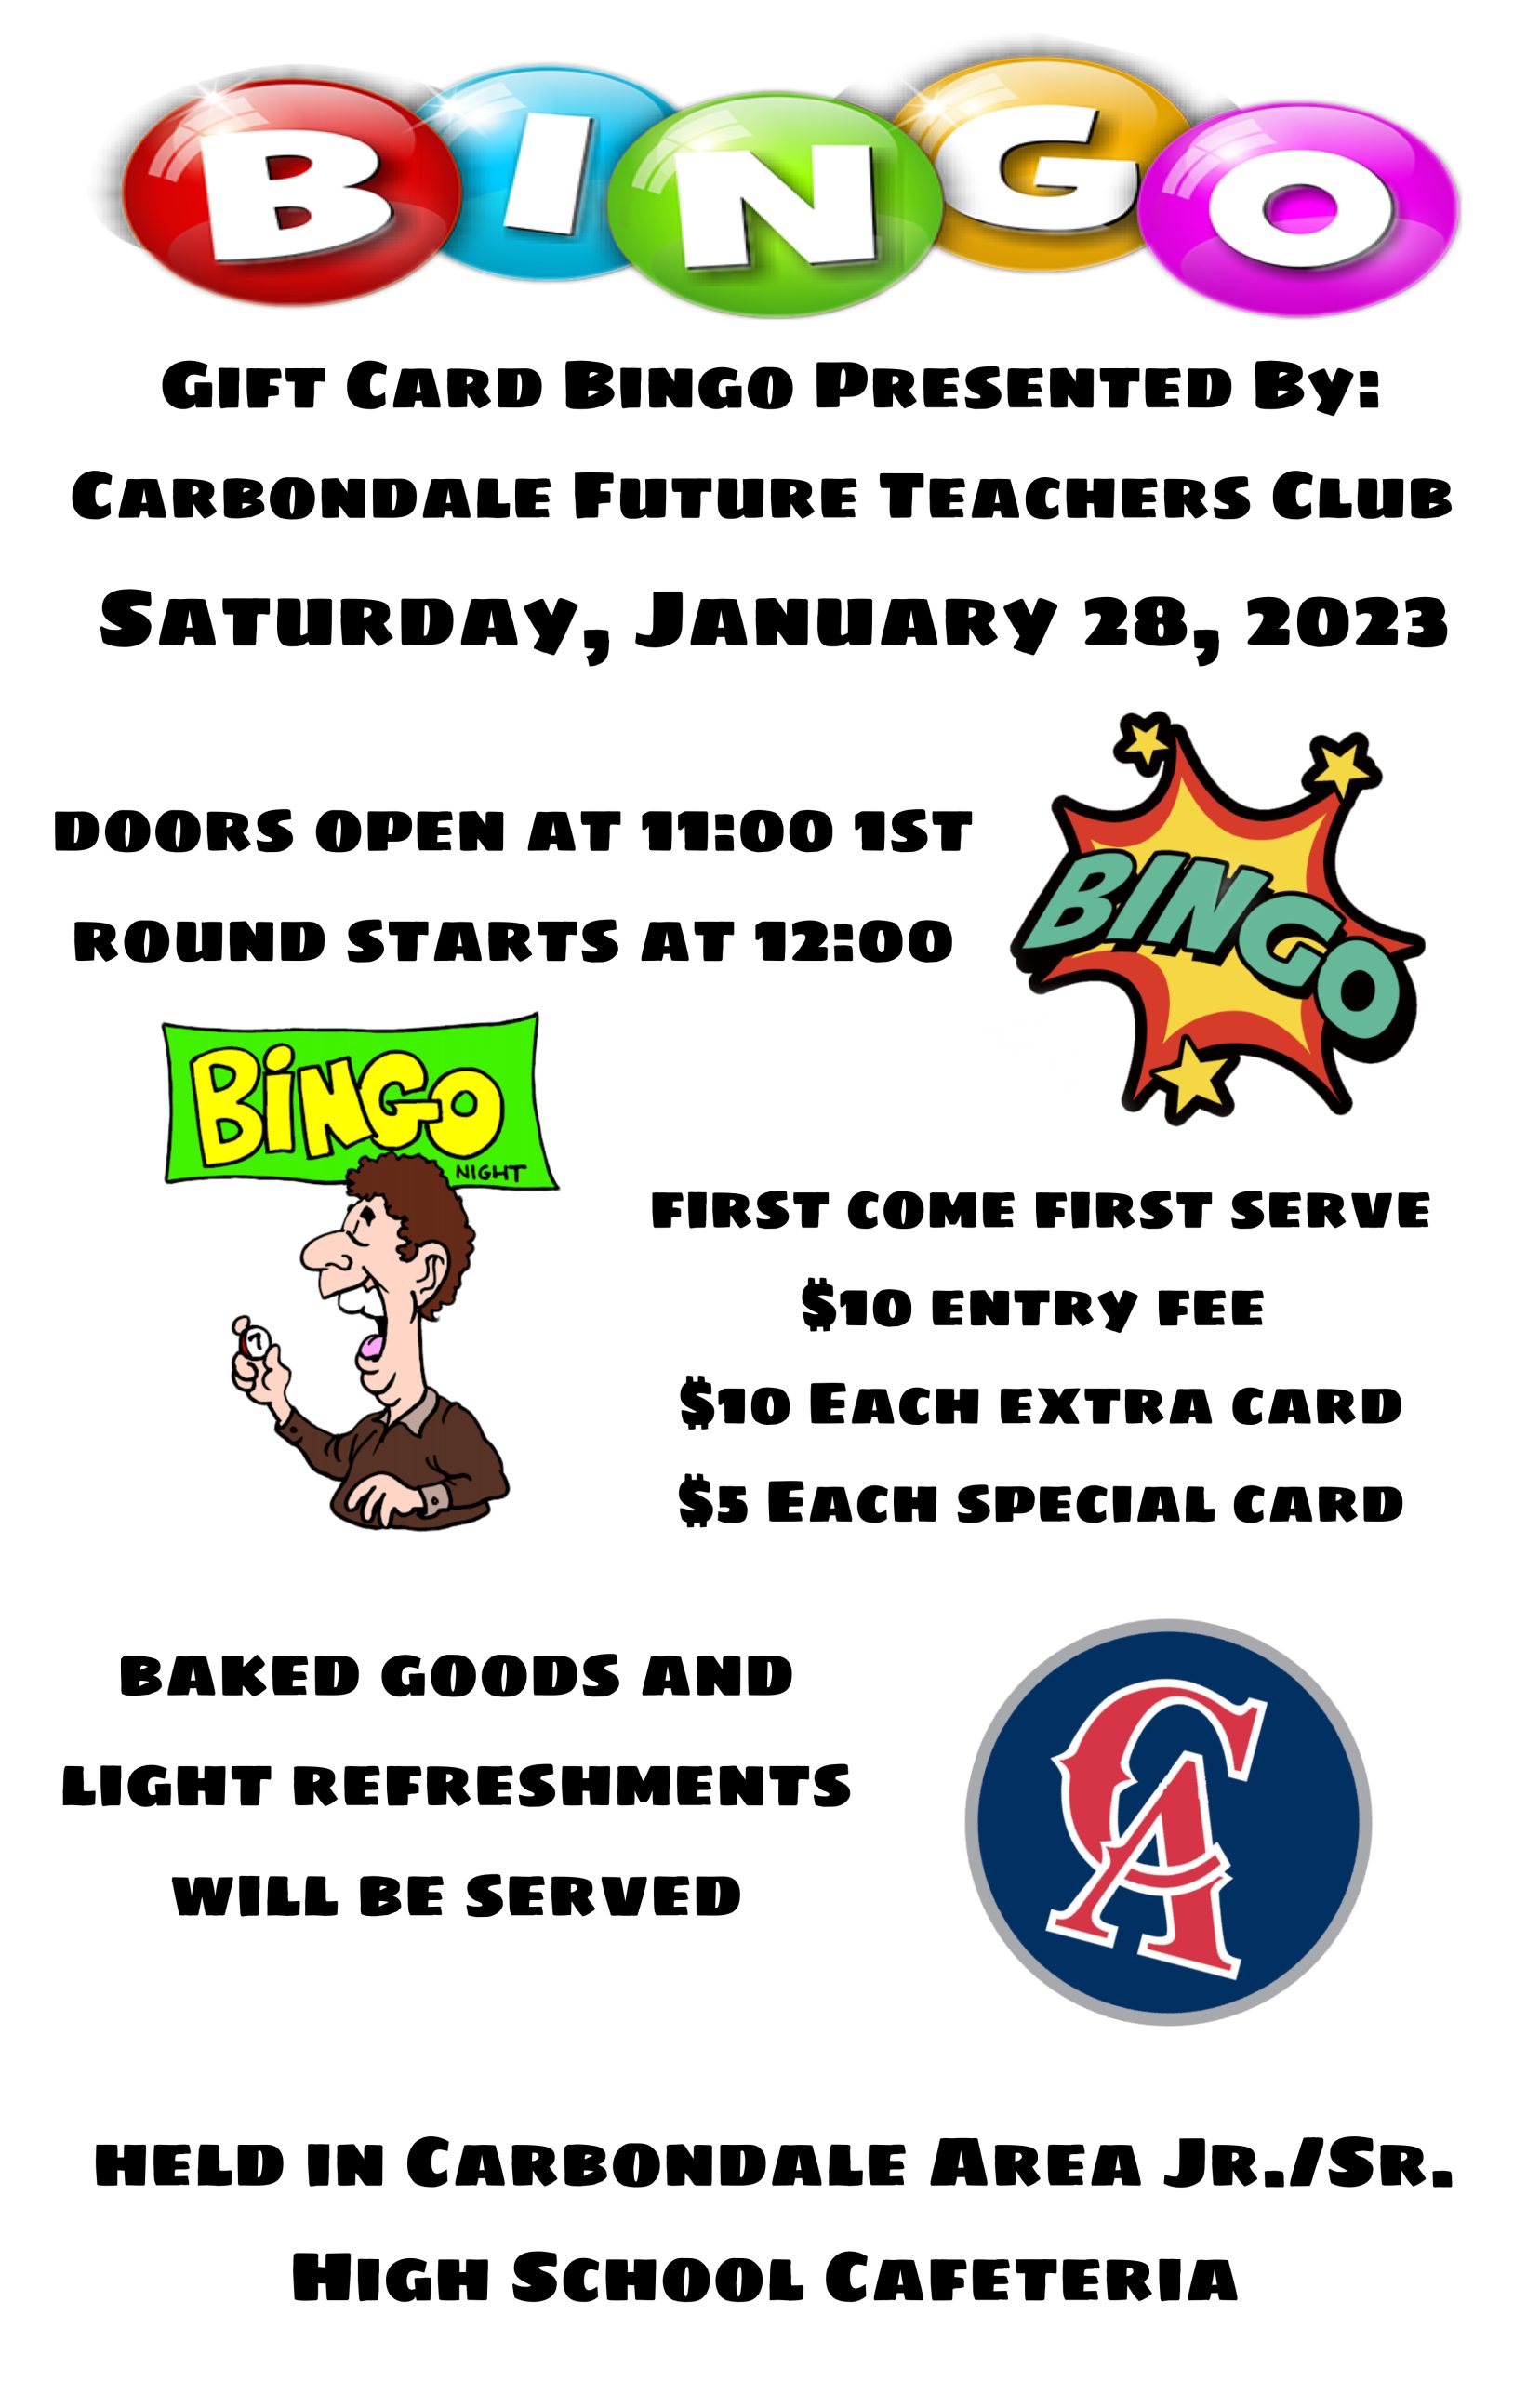 Future Teachers Club Bingo Fundraiser